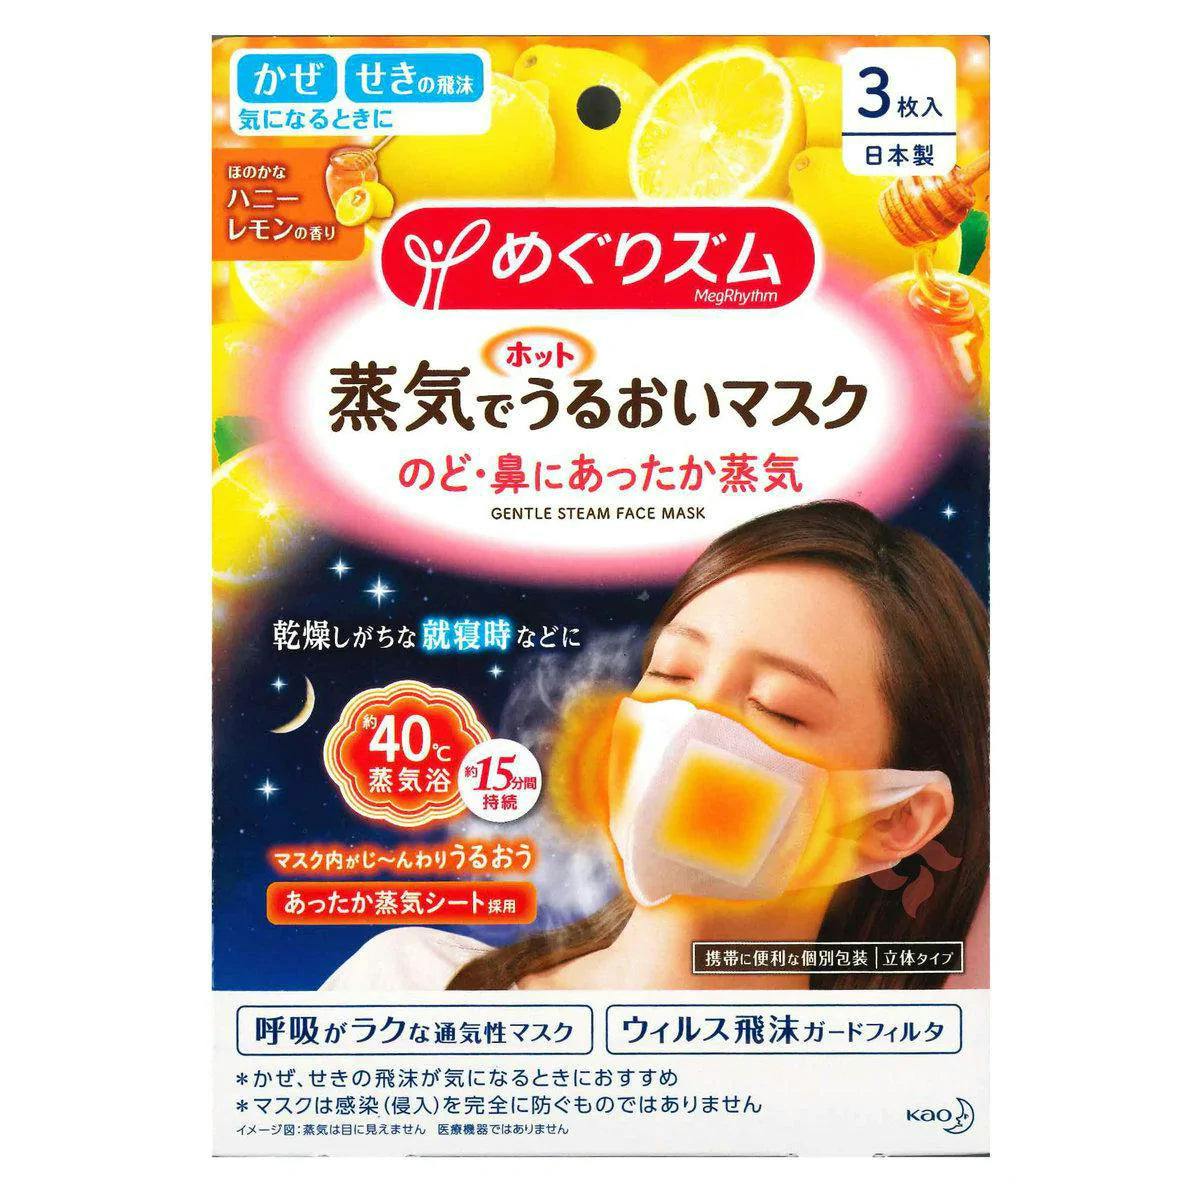 Kao Megrhythm Hot Steam Mask Honey Lemon 3 Sheets 花王蜂蜜柠檬香温热感蒸汽舒适口罩3枚入